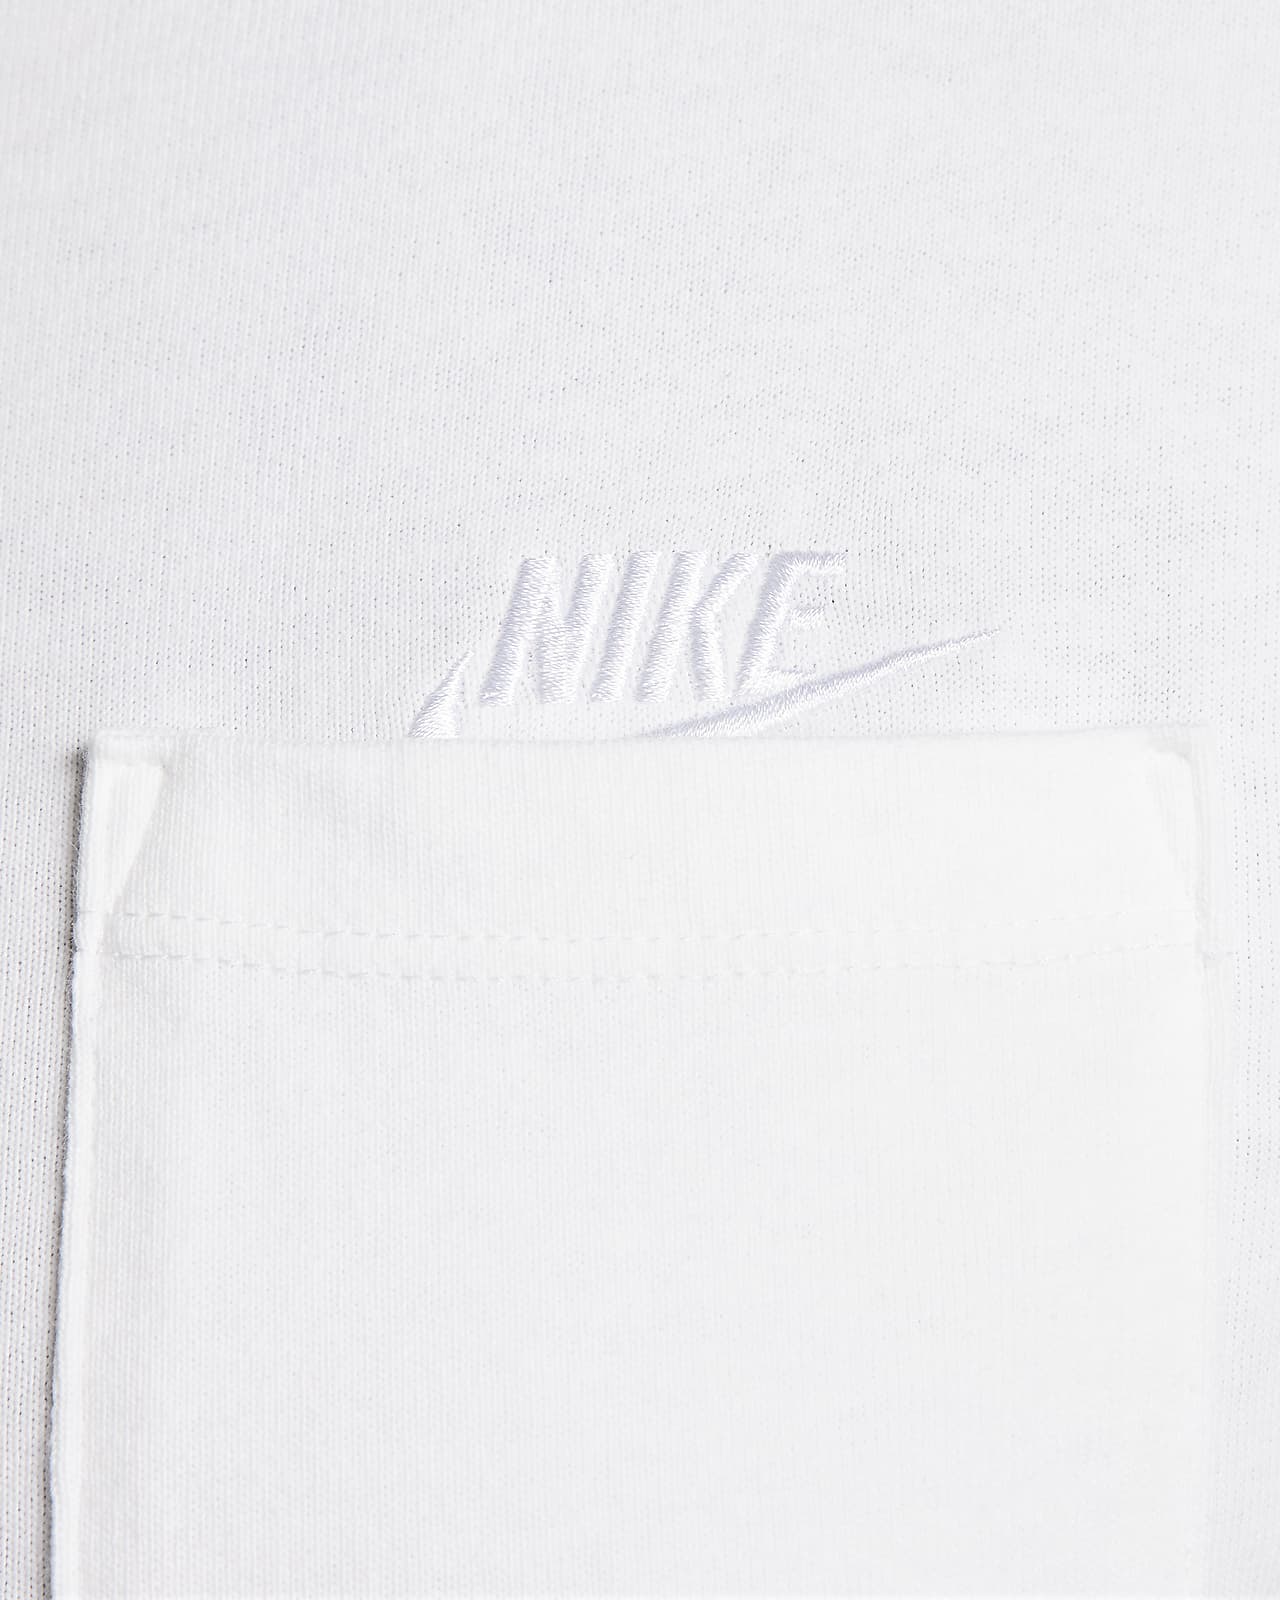 Nike Sportswear Premium Essentials Men's Long-Sleeve Pocket T-Shirt